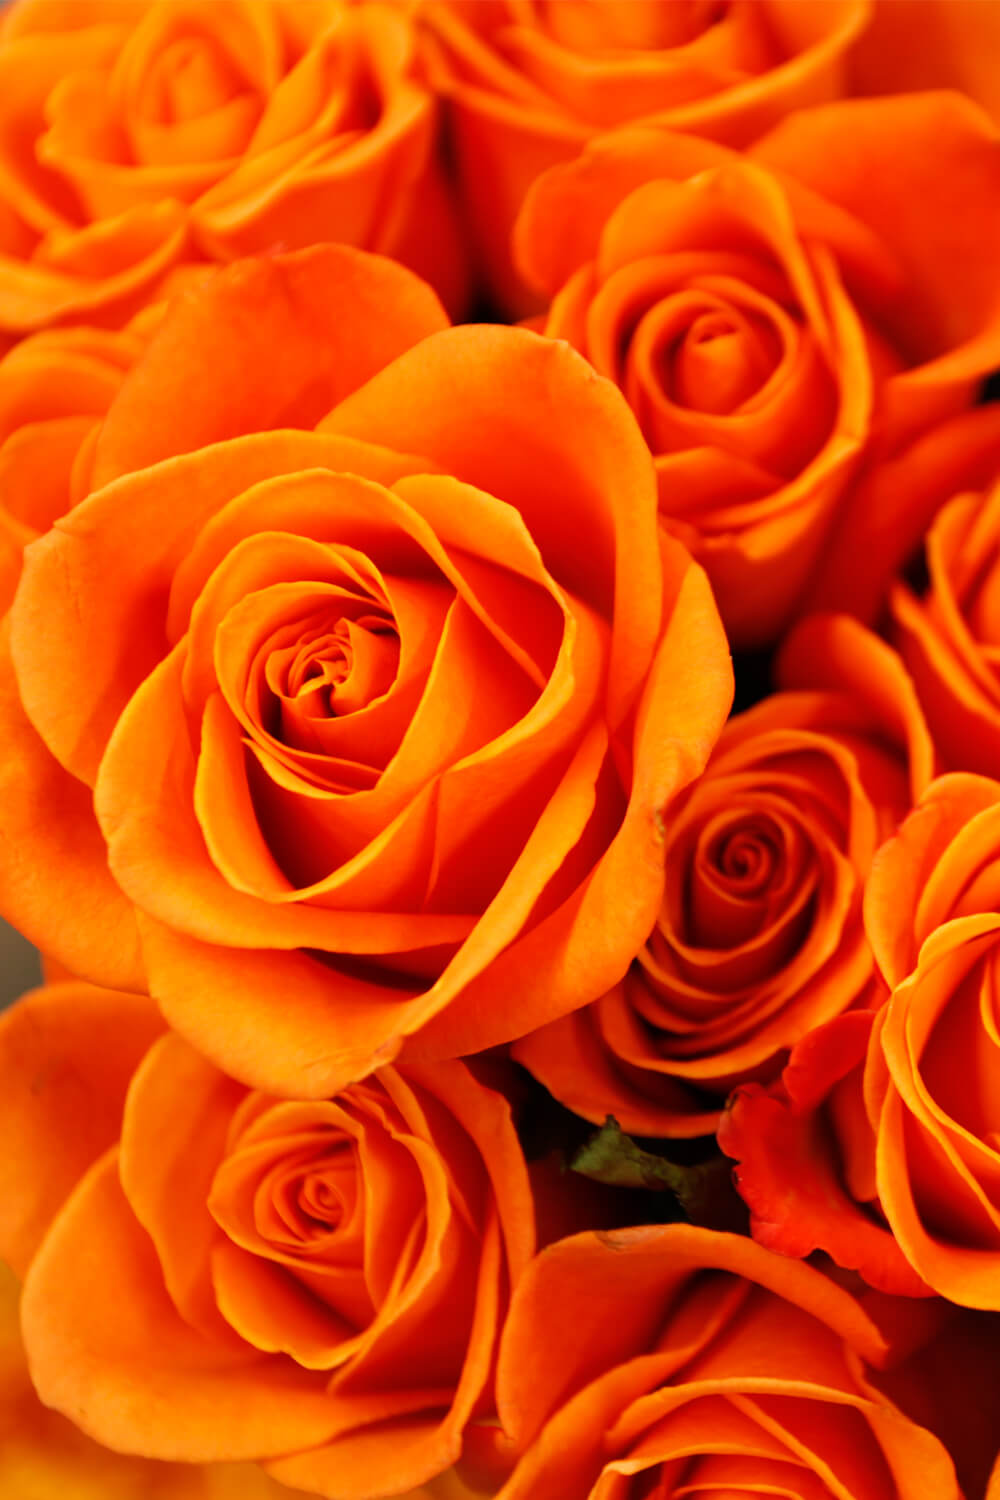 Rosen in leuchtendem Orange